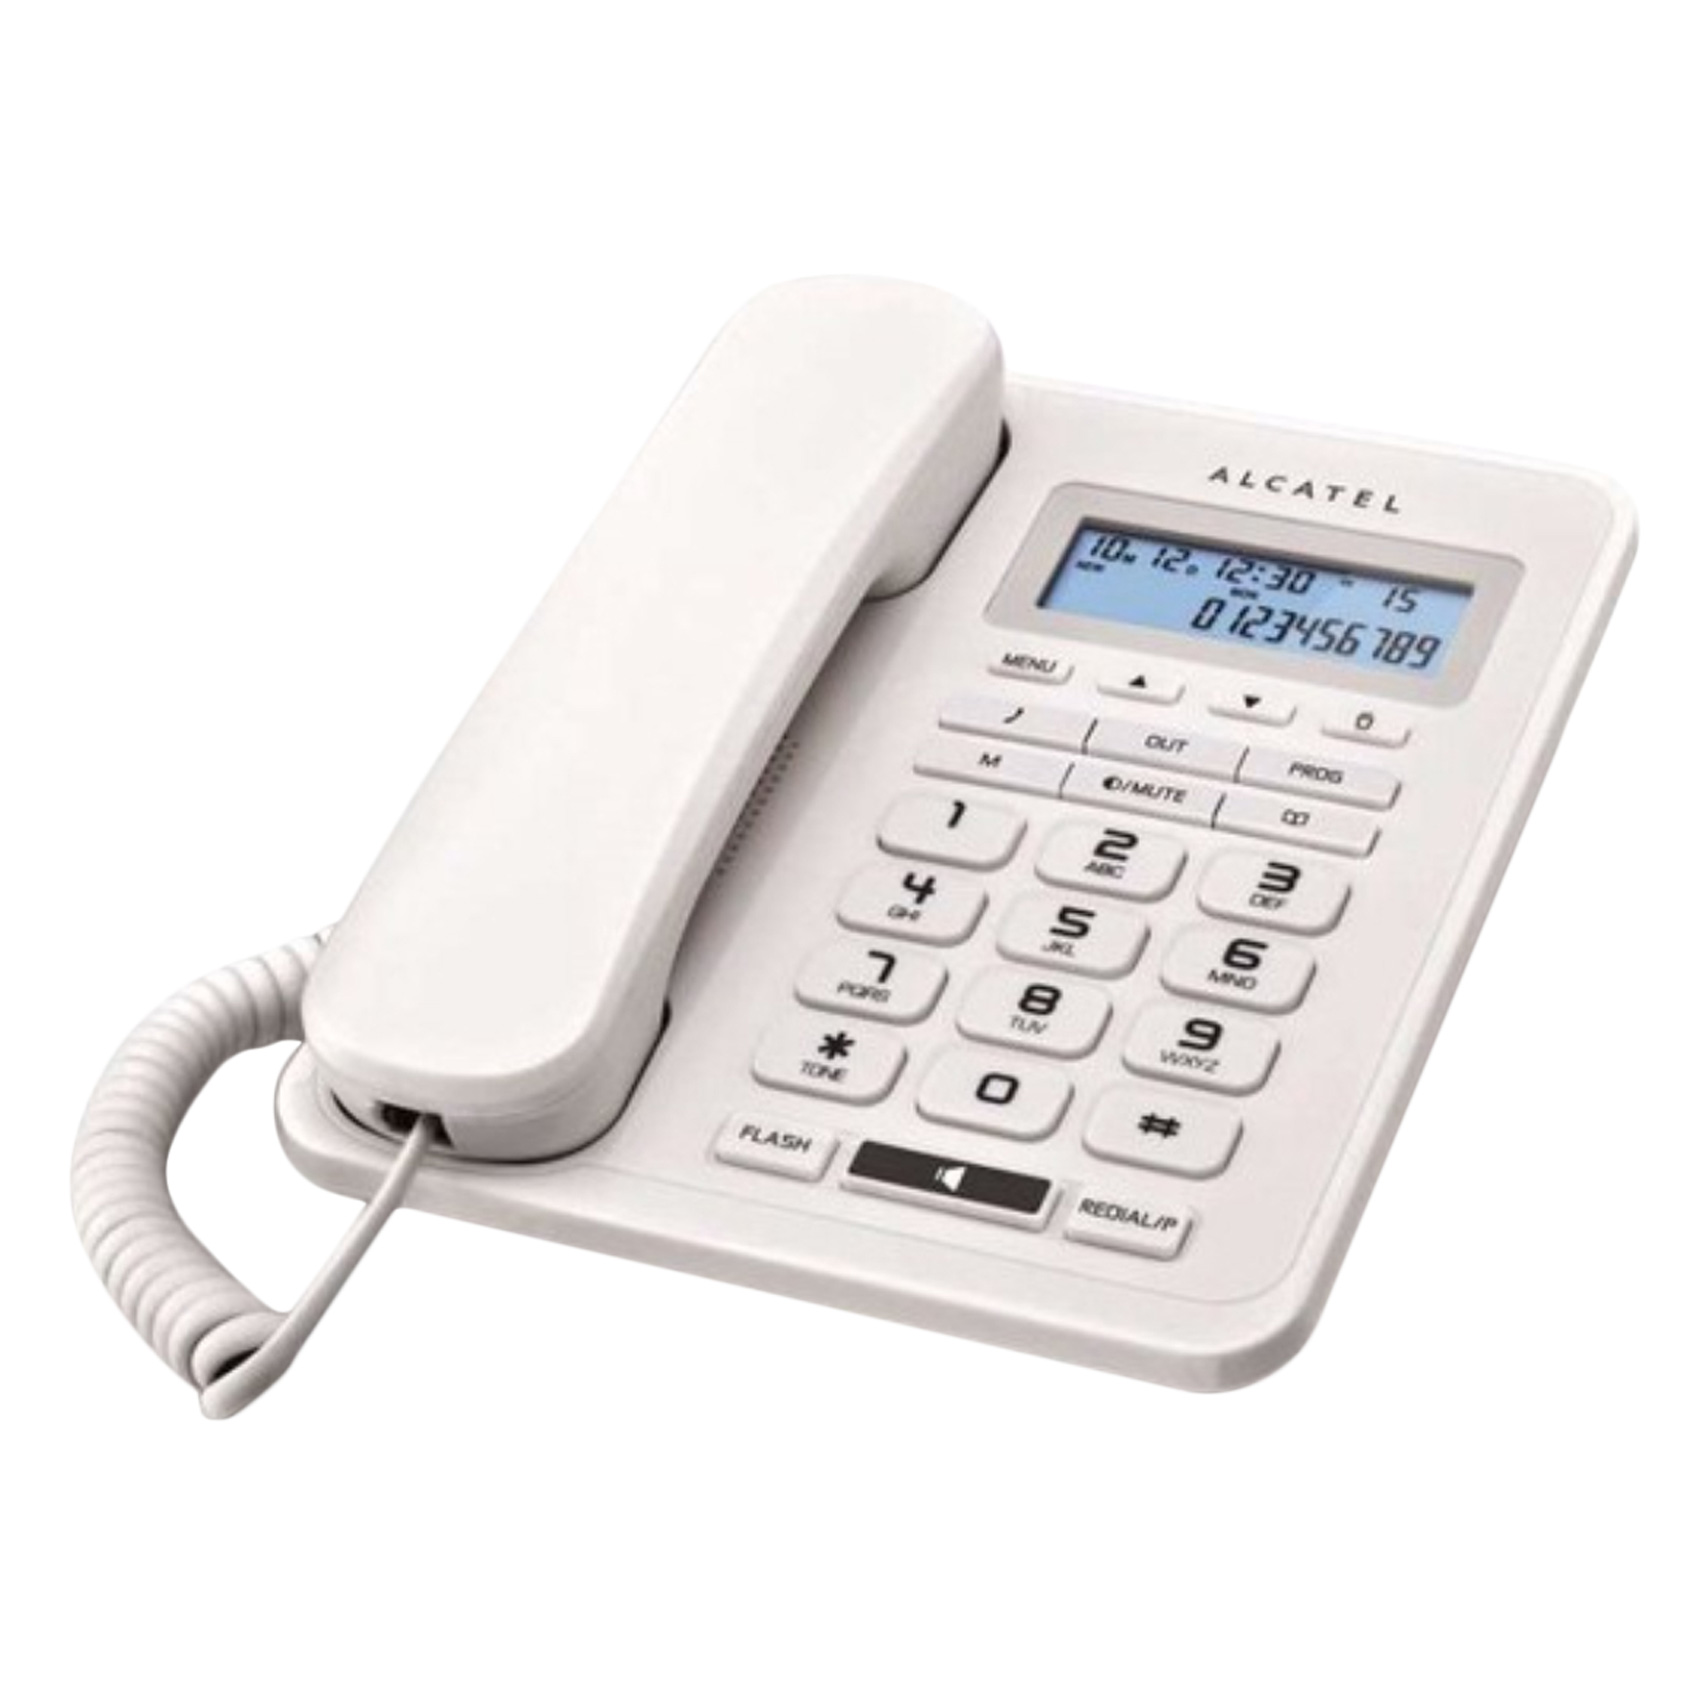 Alcatel T50 Corded Landline Phone White